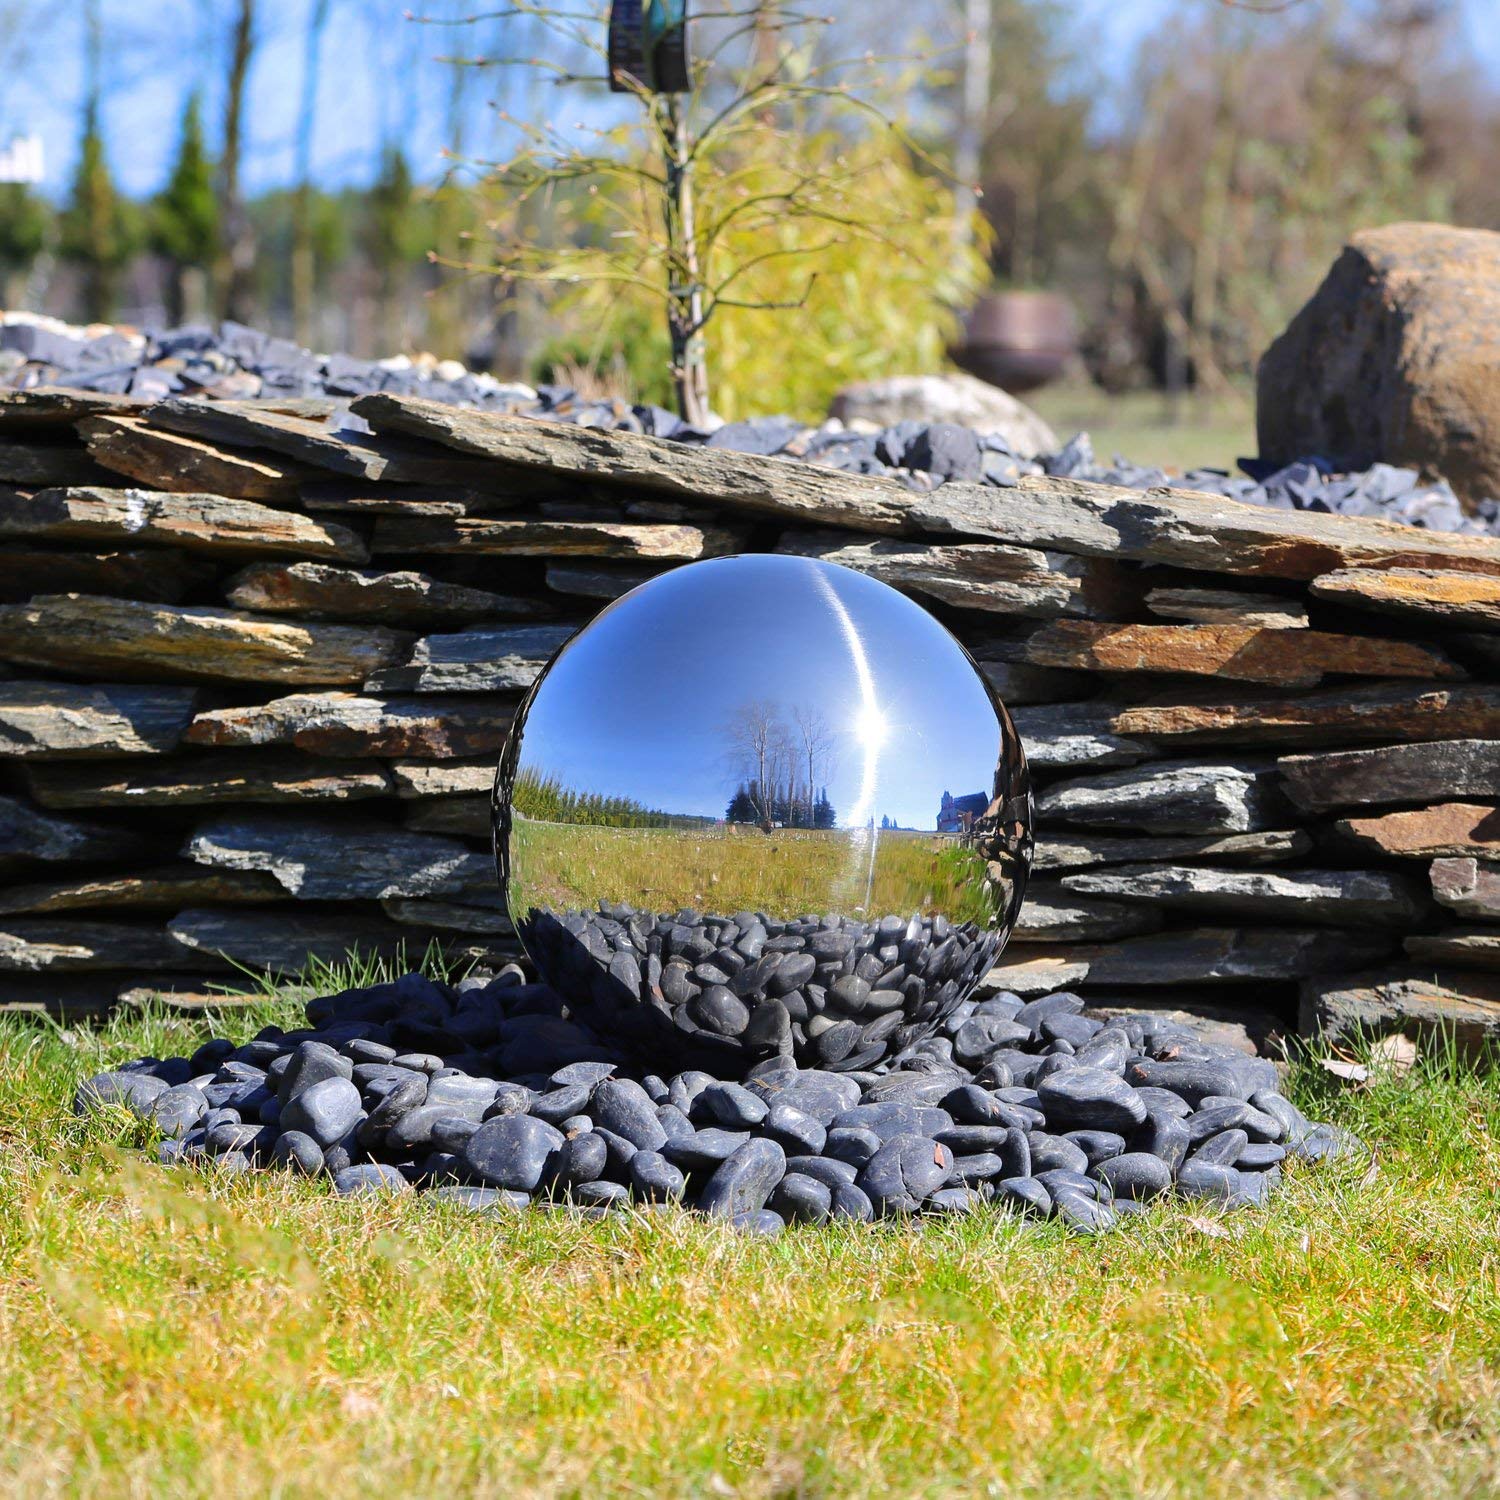 Foundation Stainless steel Hollow Sphere Sculpture Water Flow Garden Ornament